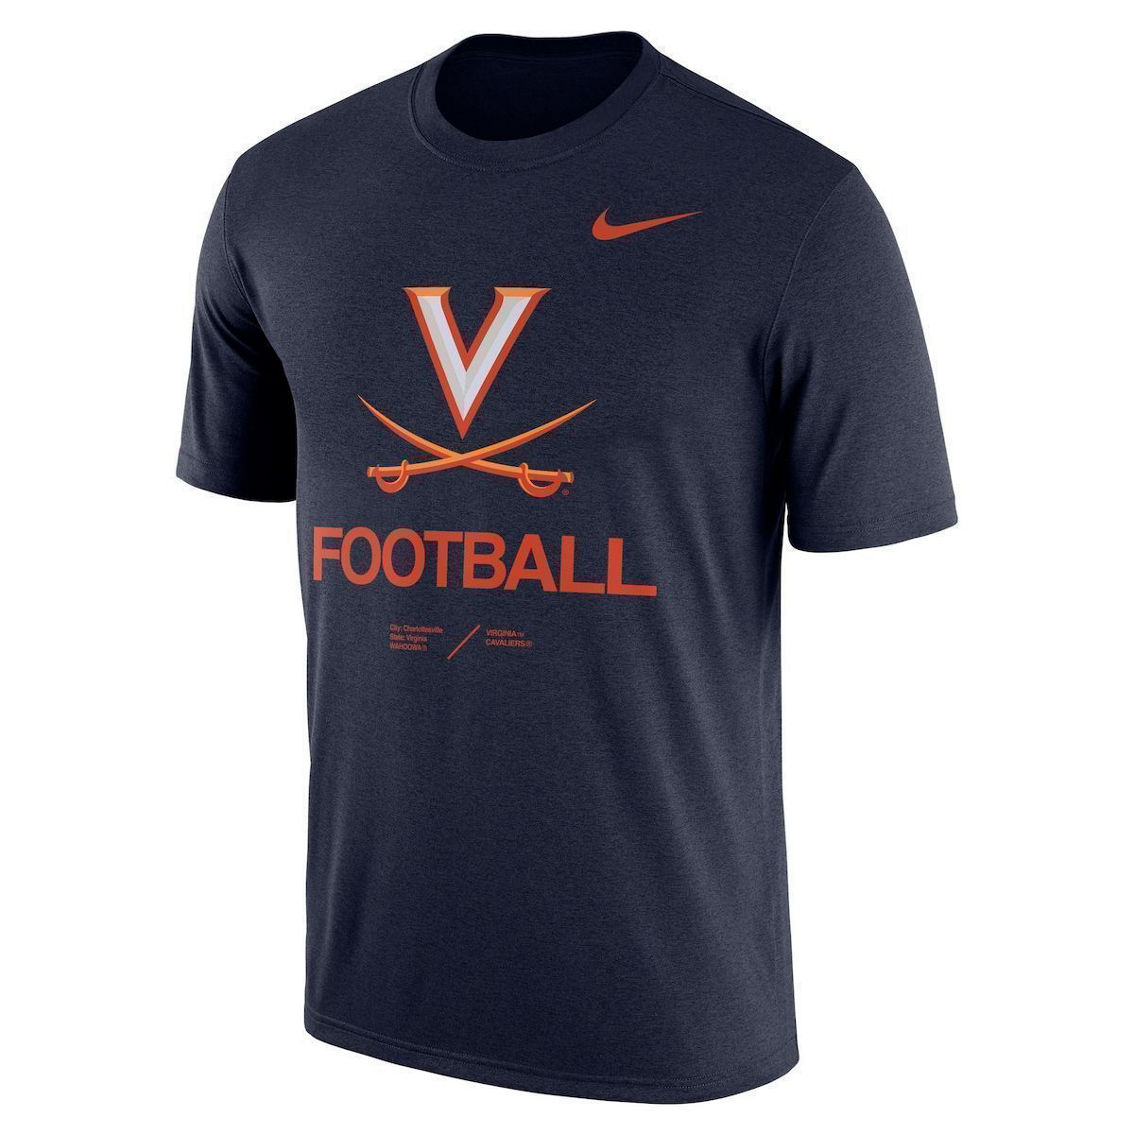 Nike Men's Heathered Navy Virginia Cavaliers Team Football Legend T-Shirt - Image 3 of 4